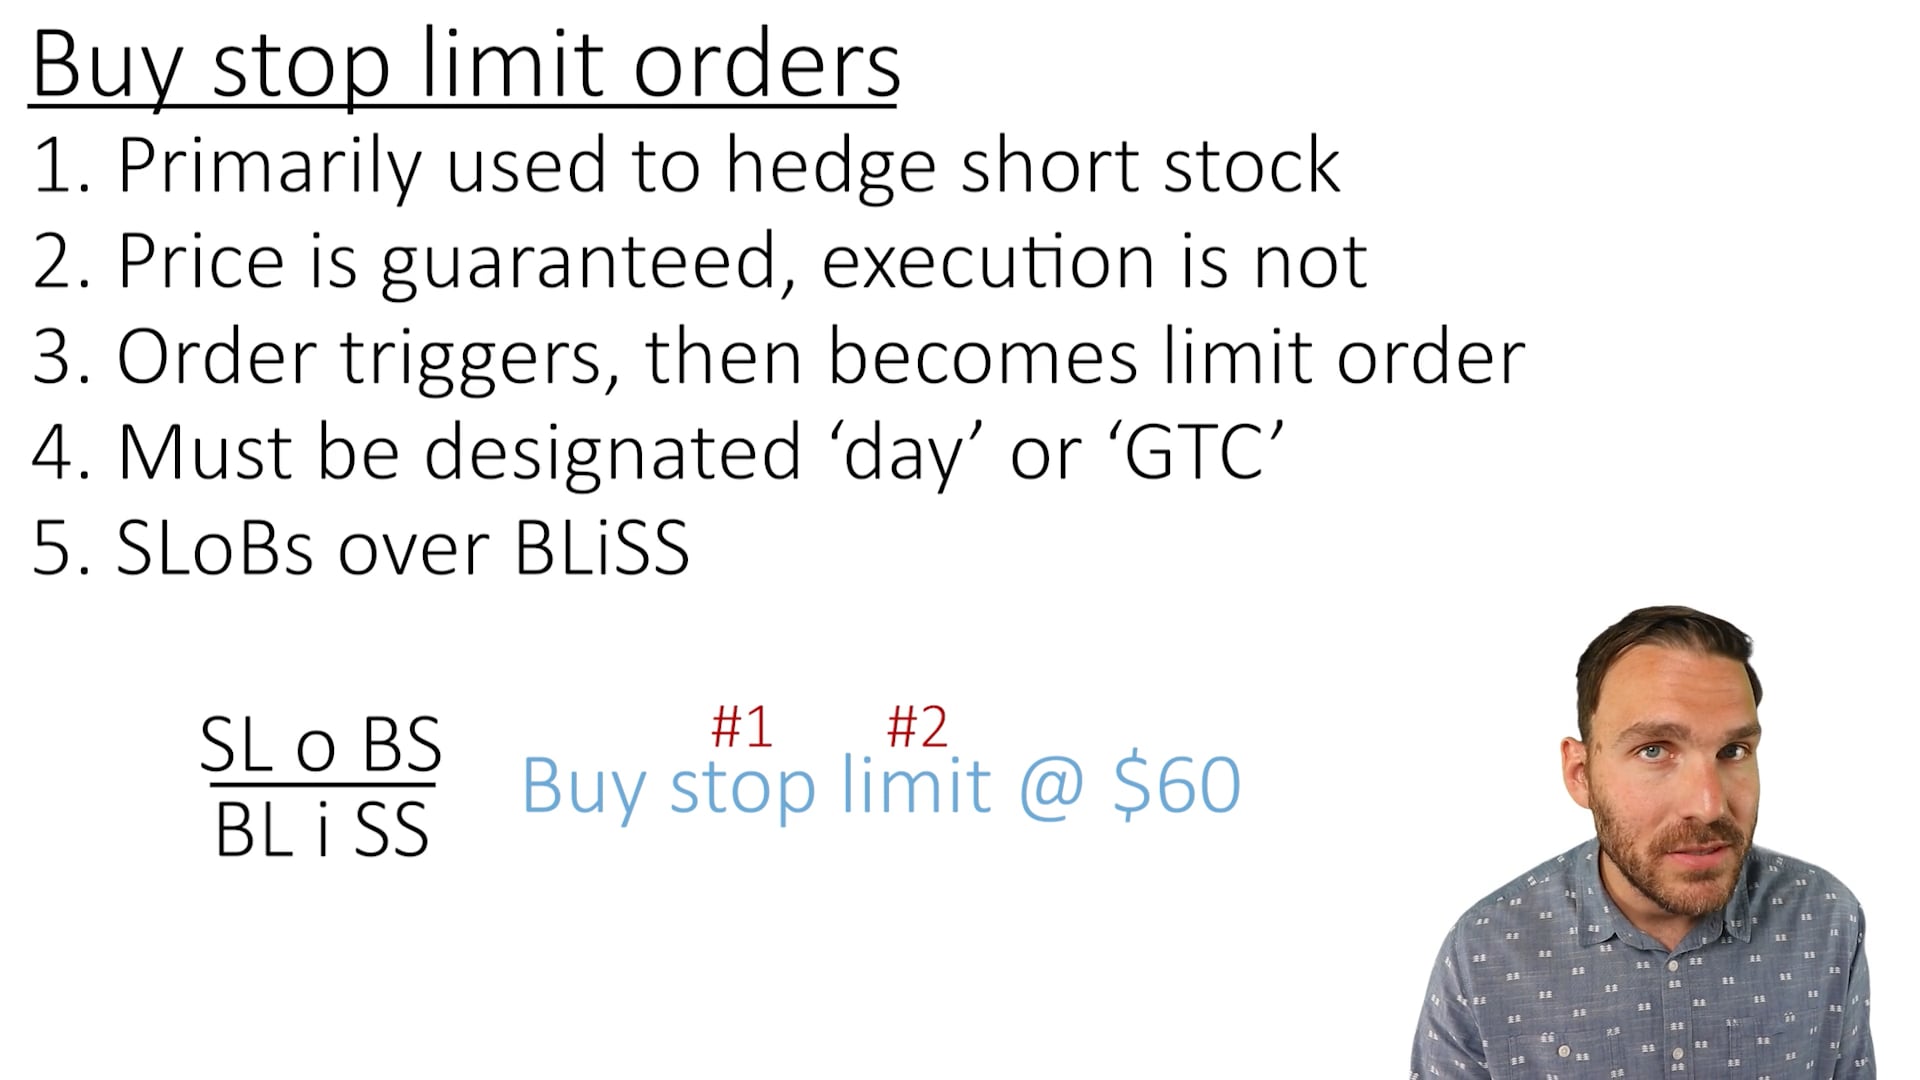 Buy stop limit orders